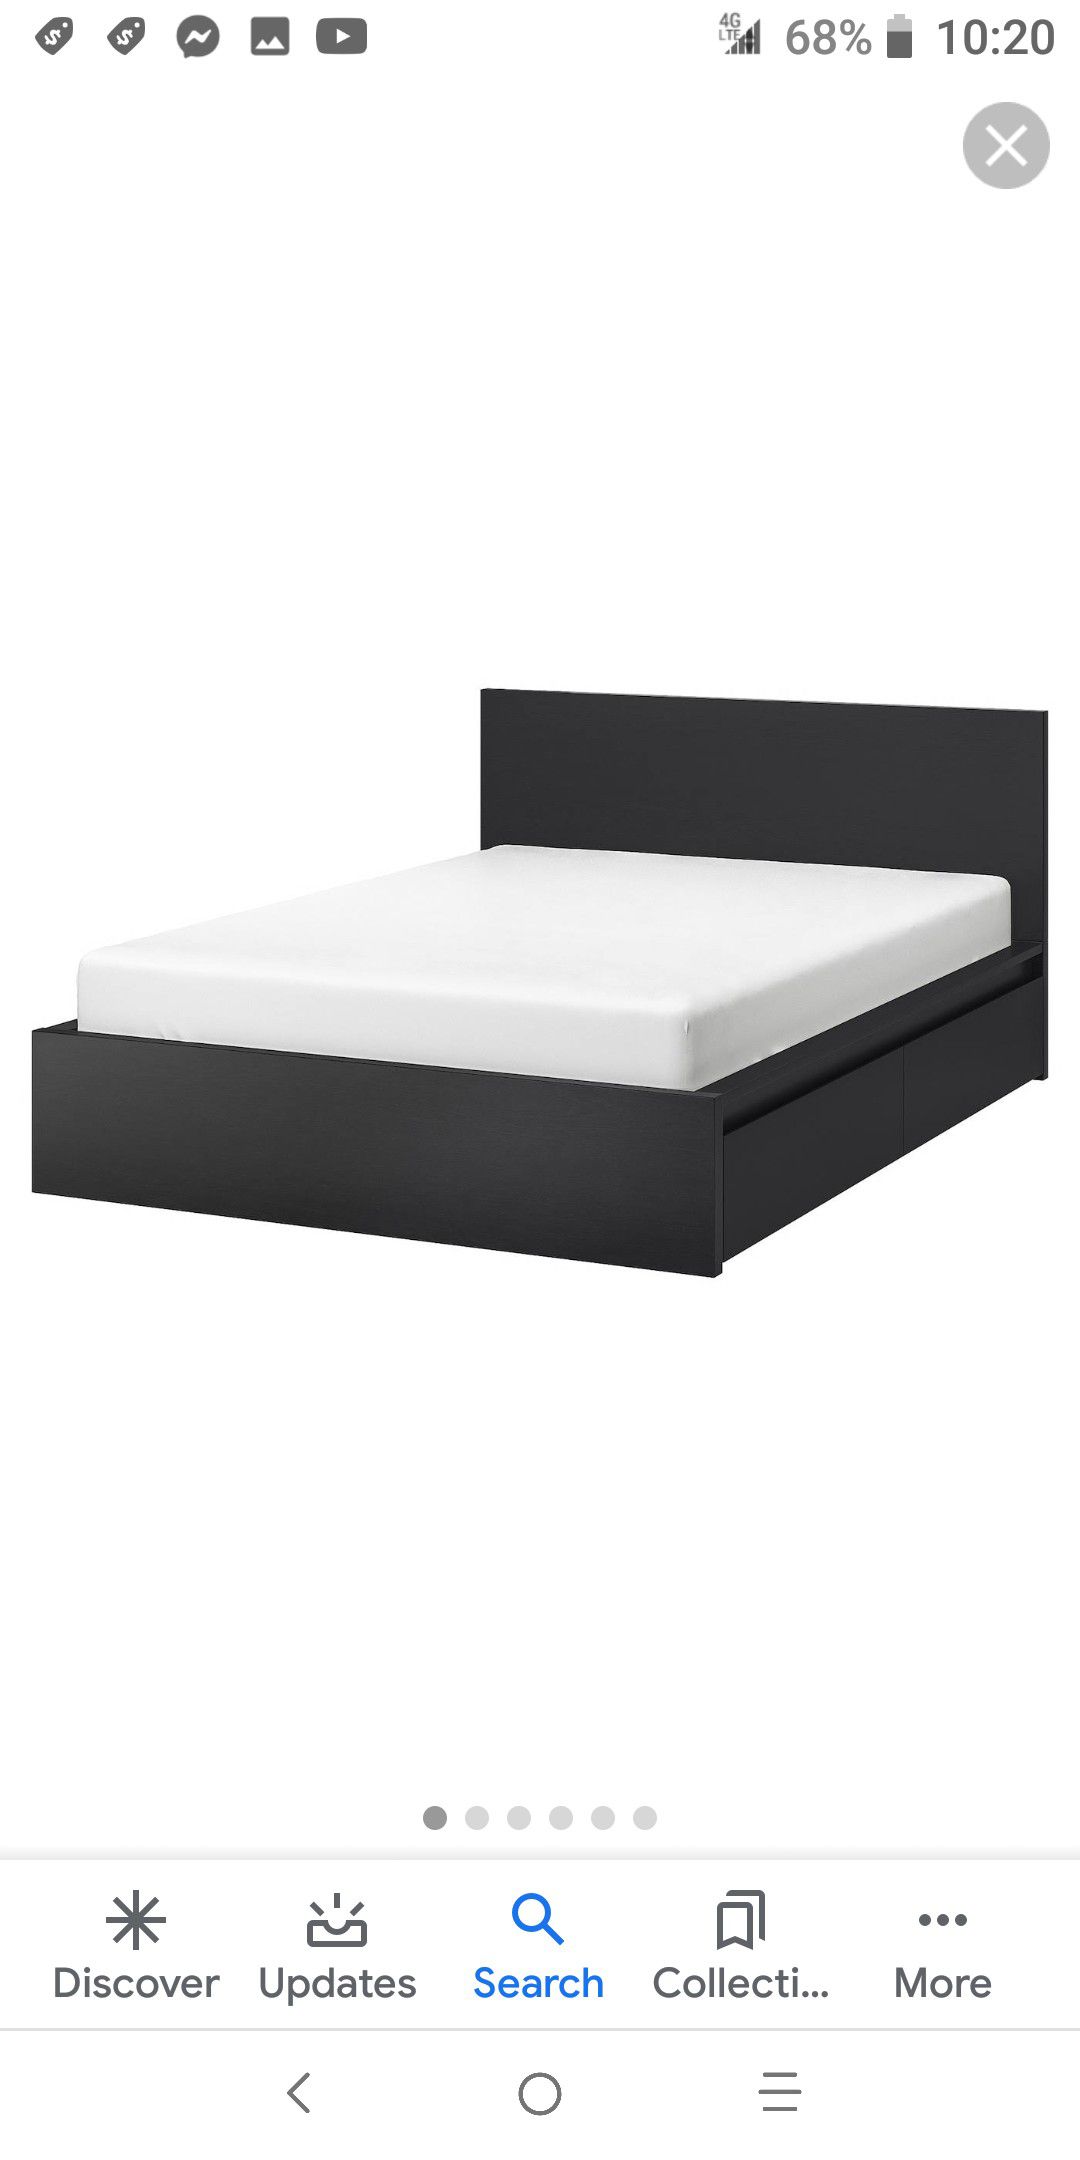 Ikea king size bed with 4 storage draws